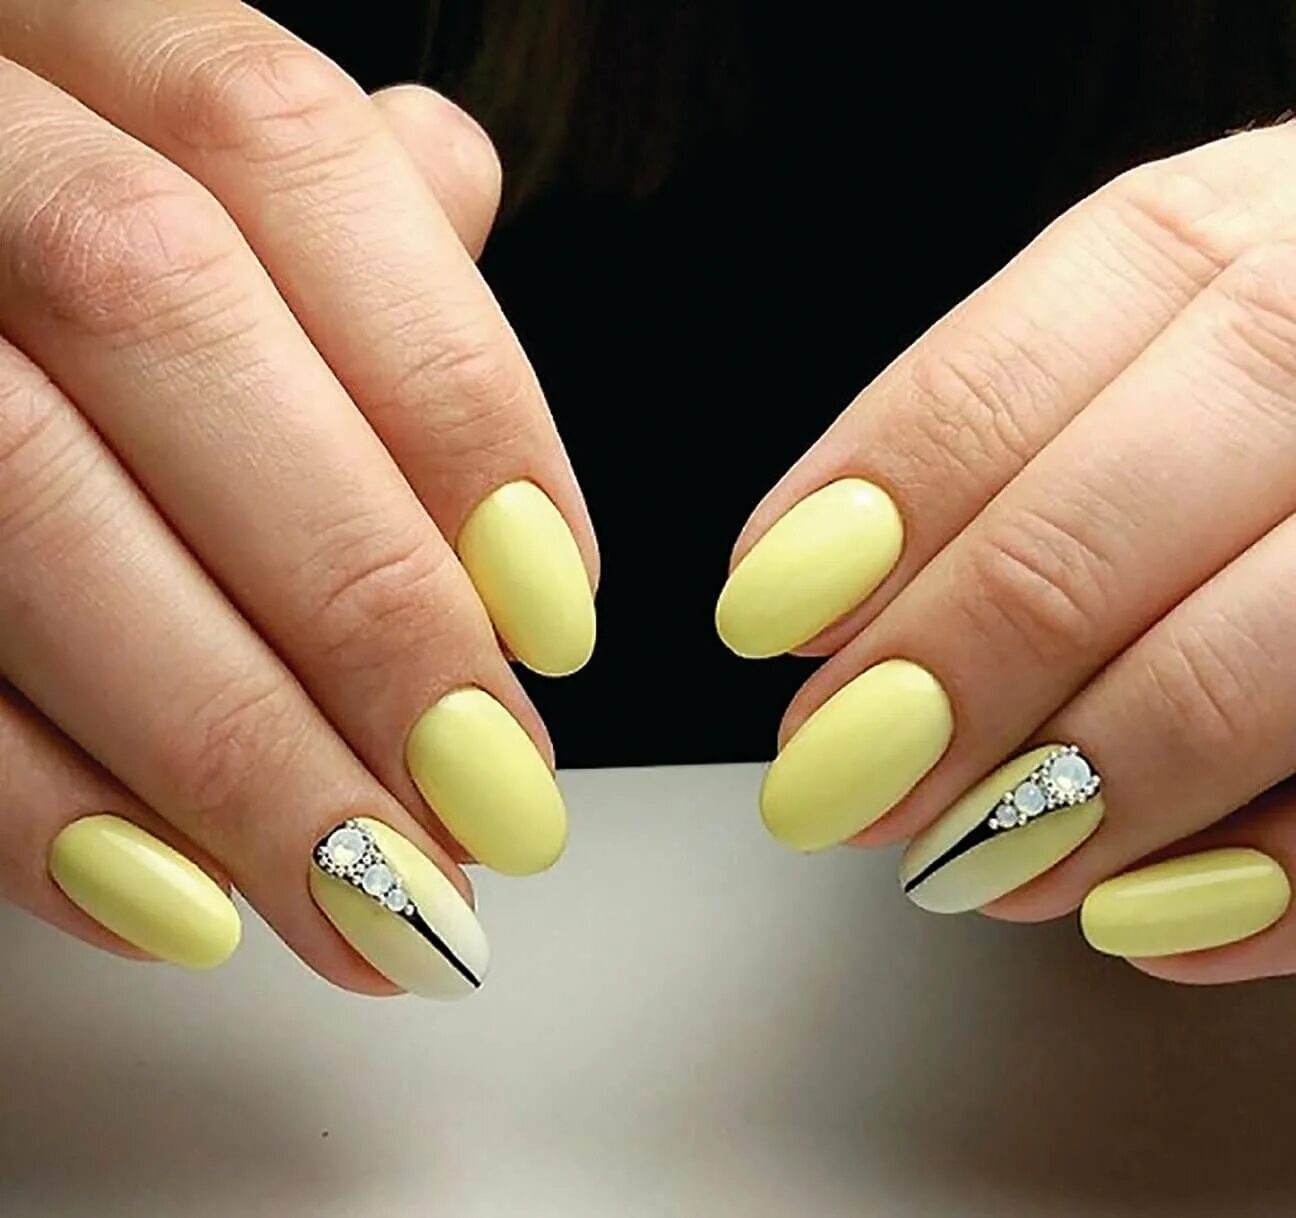 Дизайны желтых маникюр ногтей. Желтый маникюр. Лимонный маникюр. Красивые желтые ногти. Жёлтые ногти маникюр.